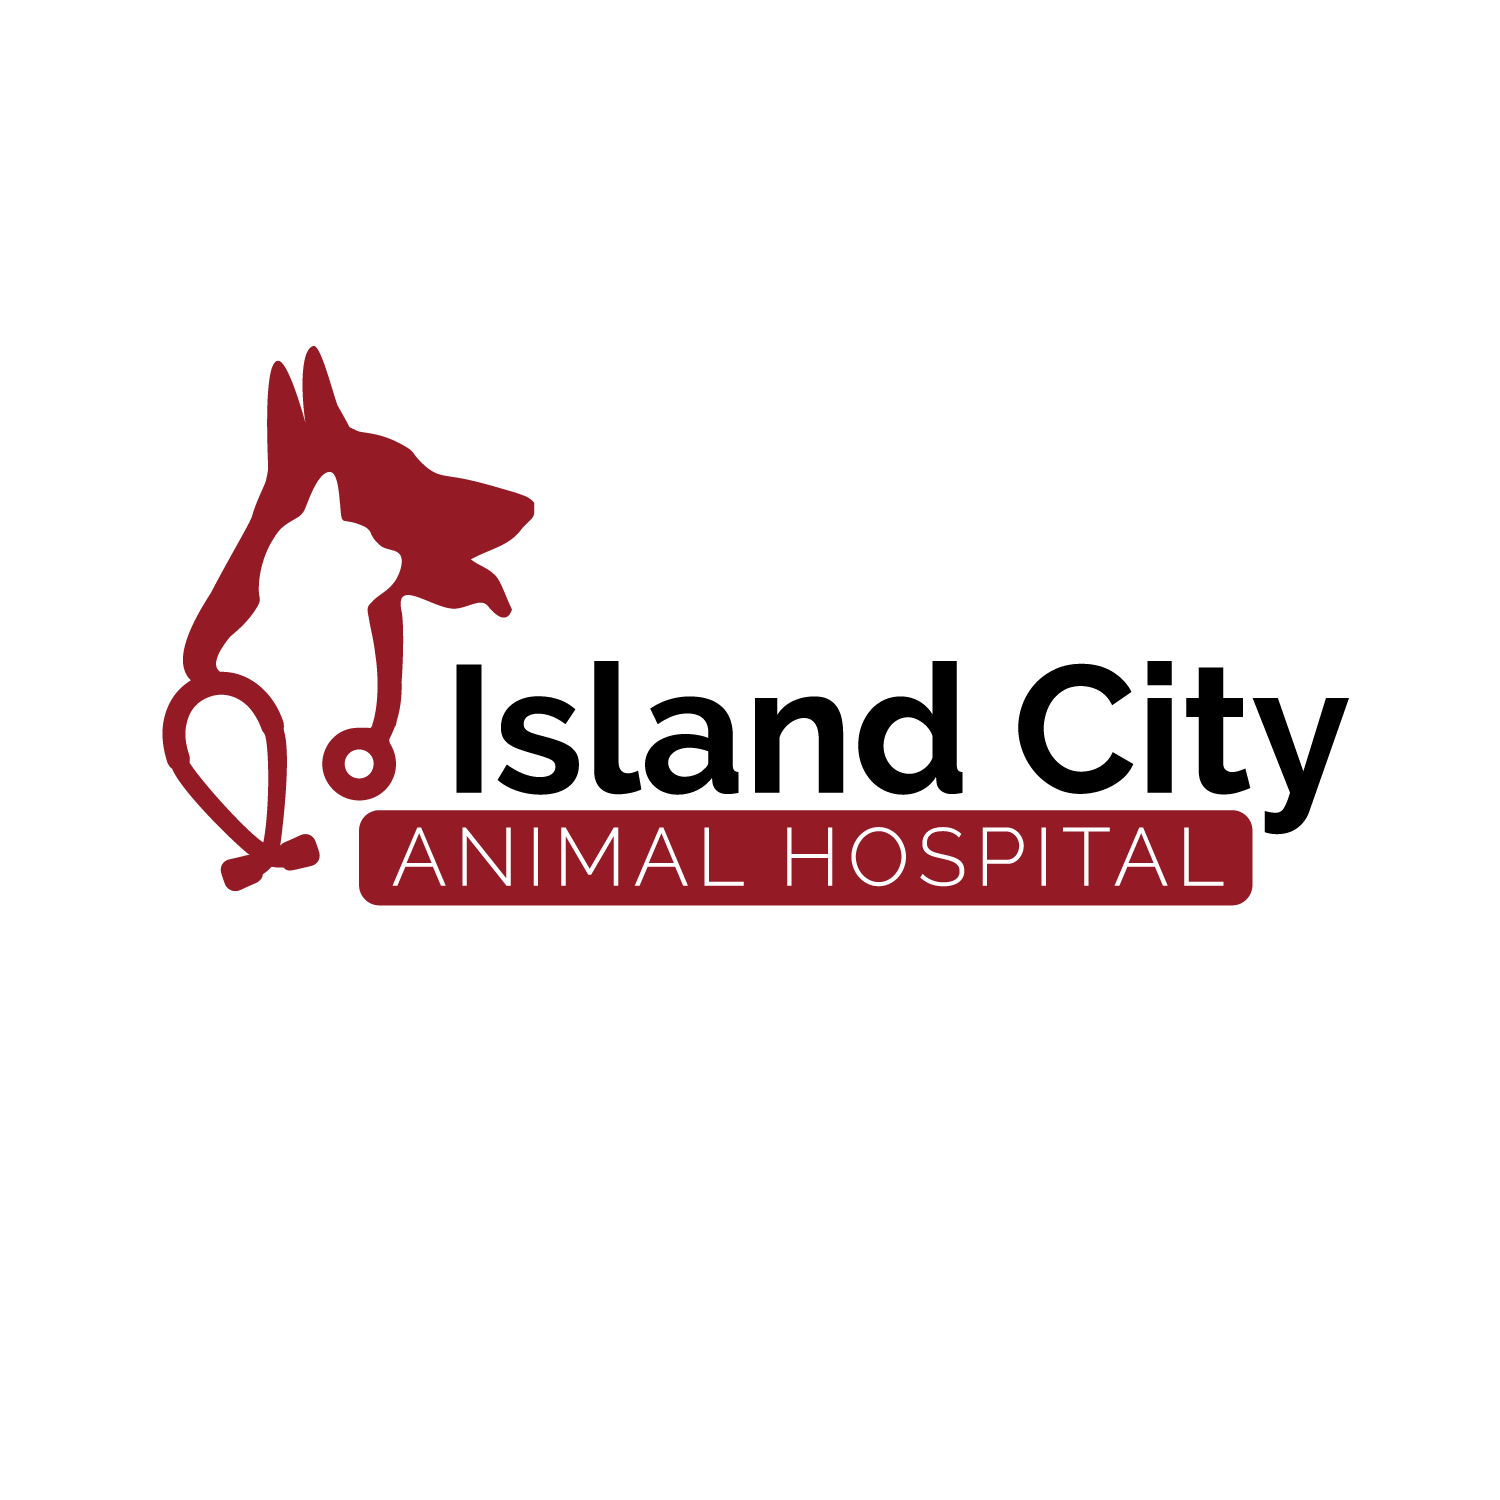 Island City Animal Hospital Logo